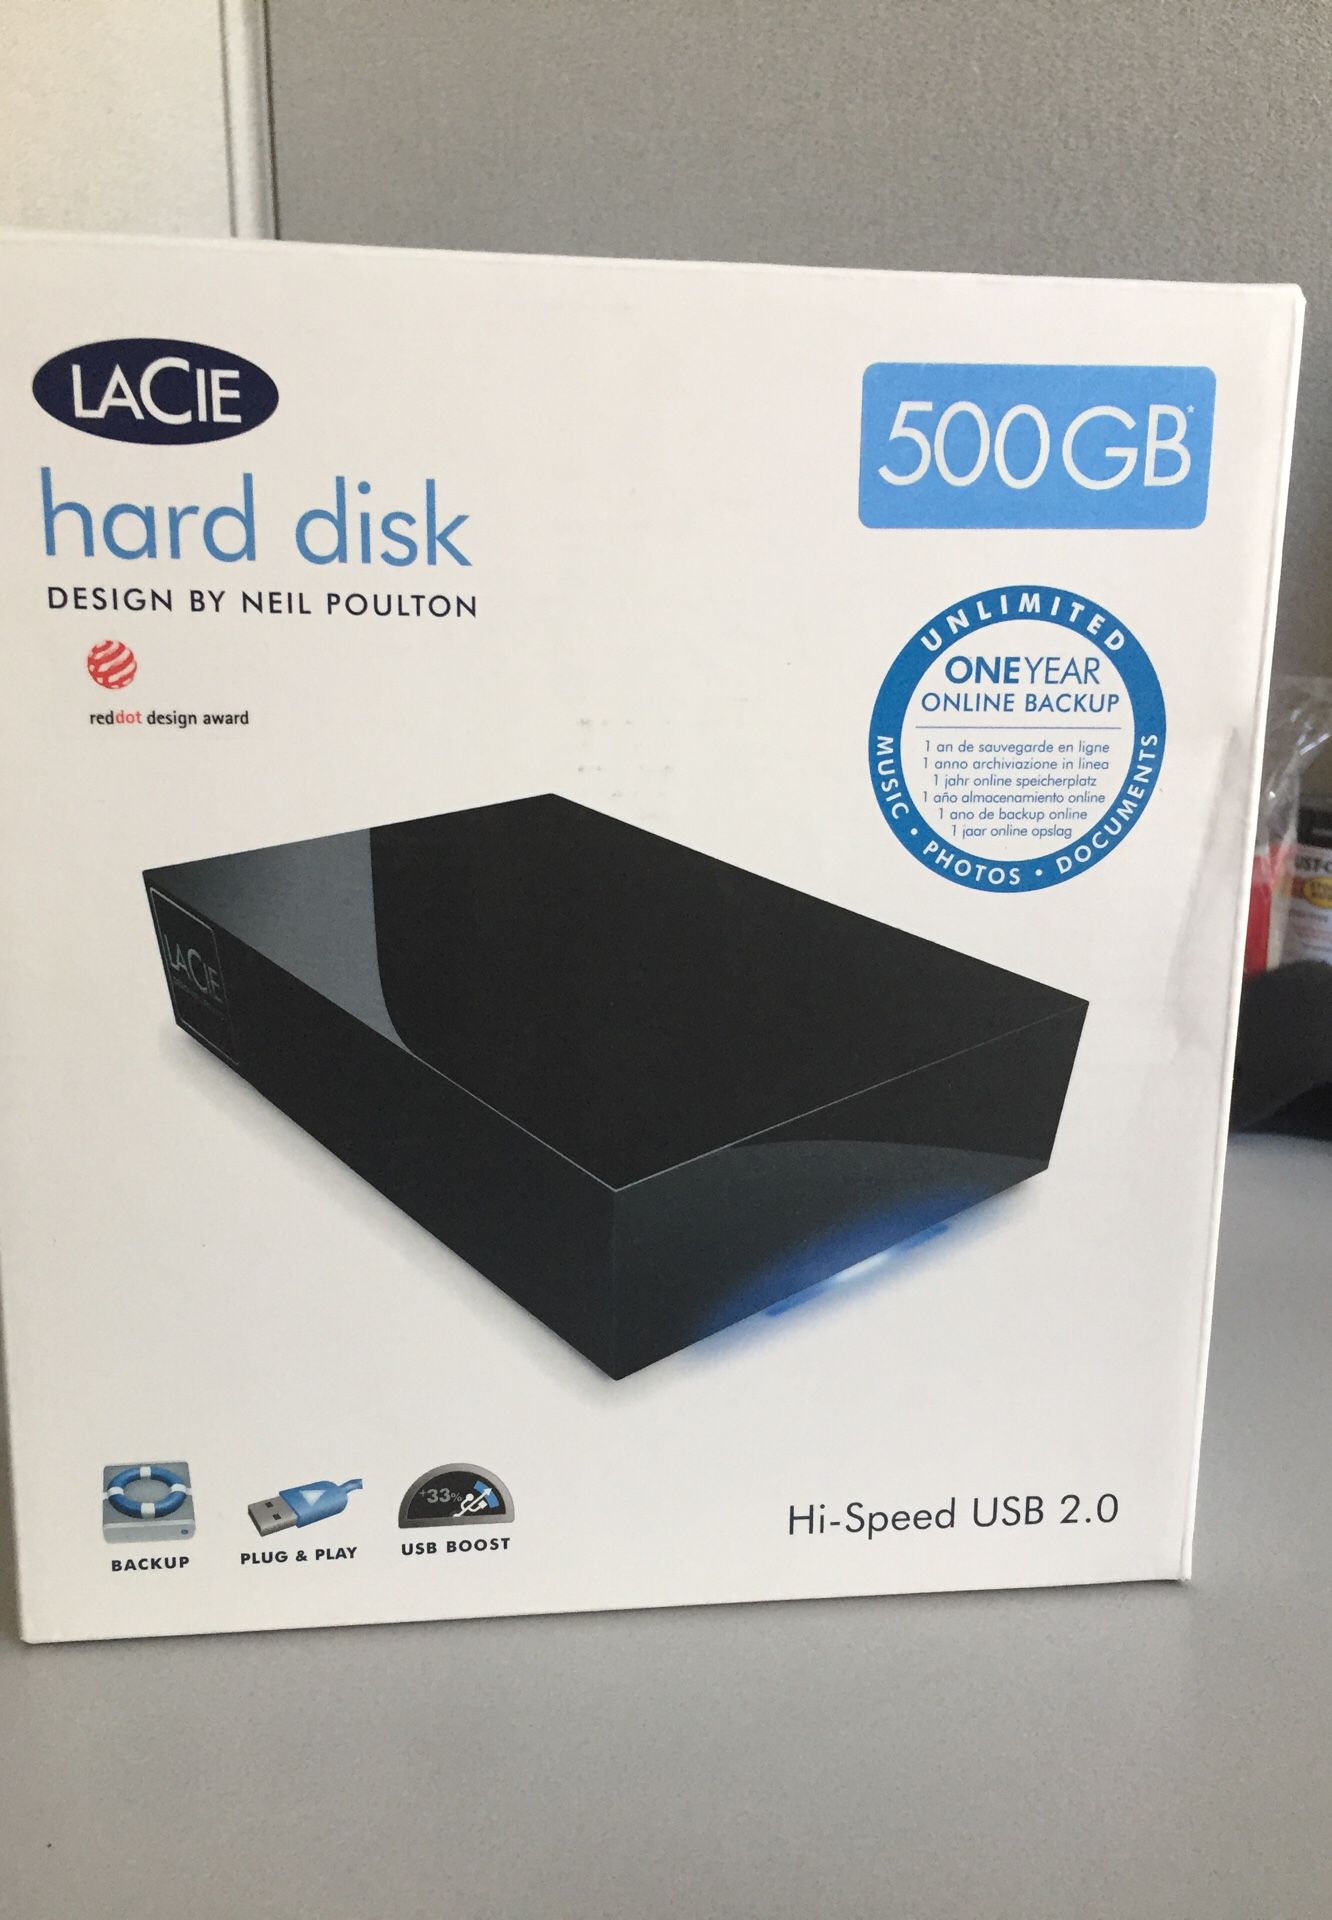 Lacie 500gb hard disk USB 2.0